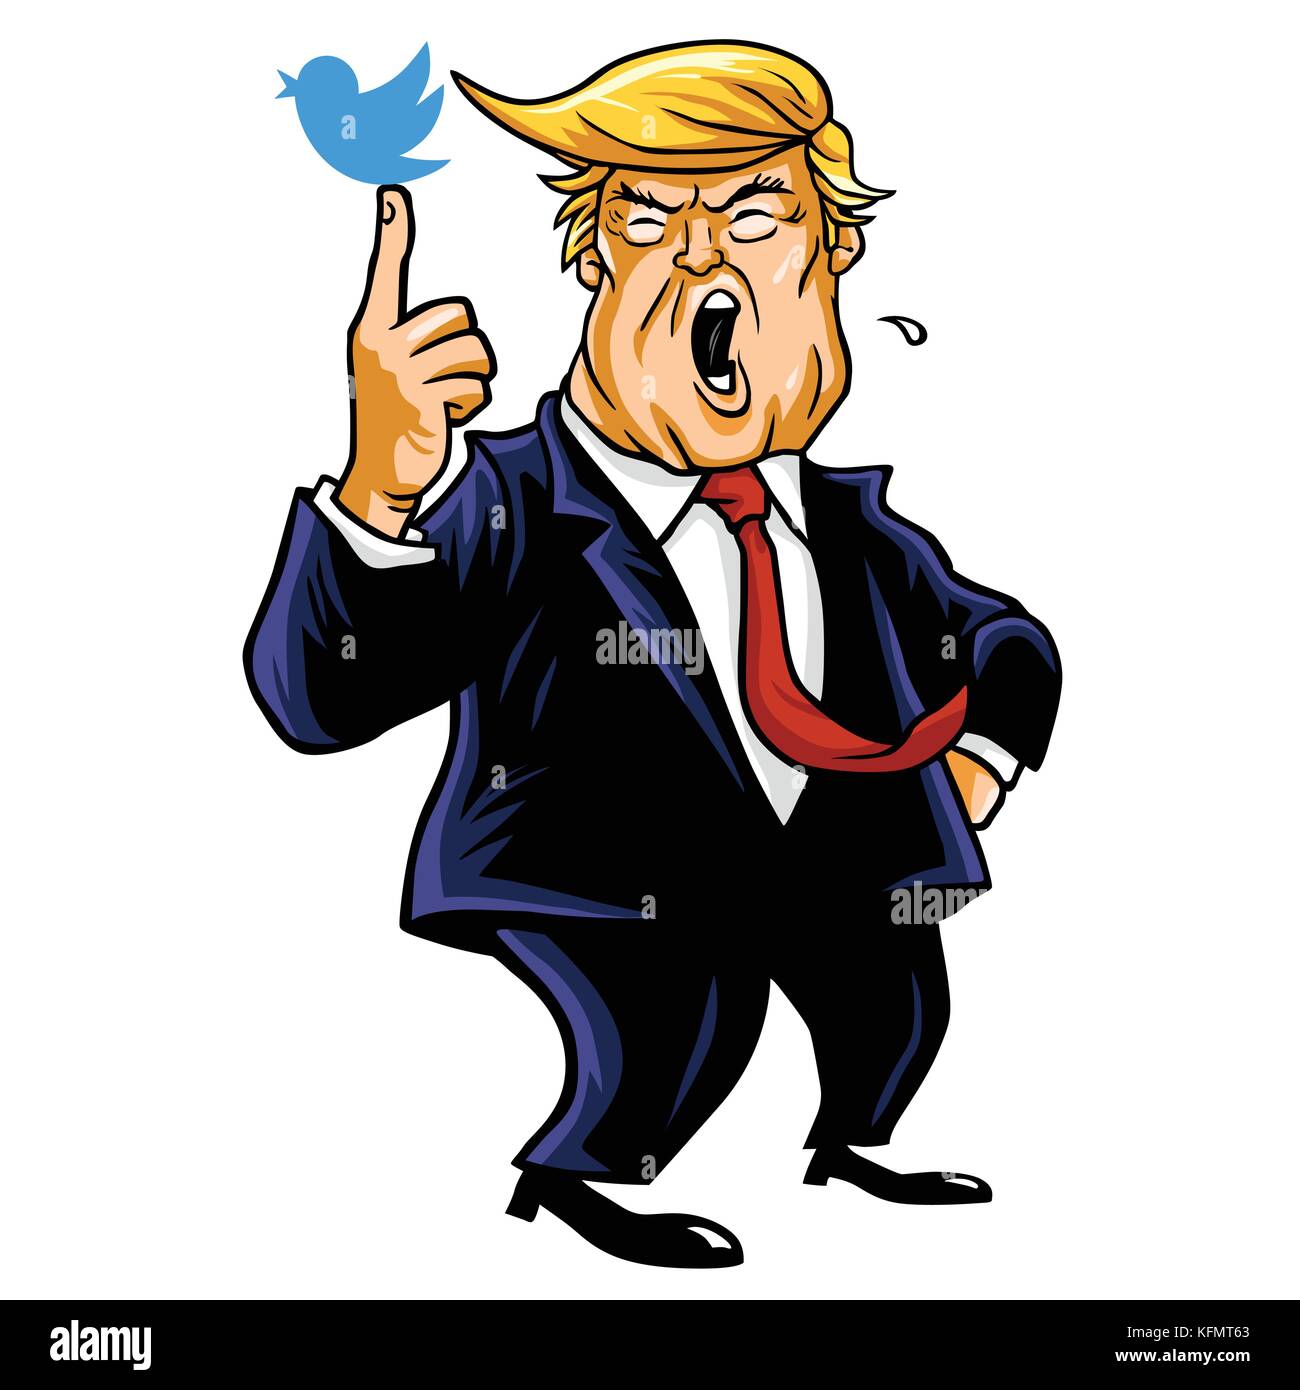 Donald Trump Tweets. Cartoon Illustration. October 31, 2017 Stock Vector